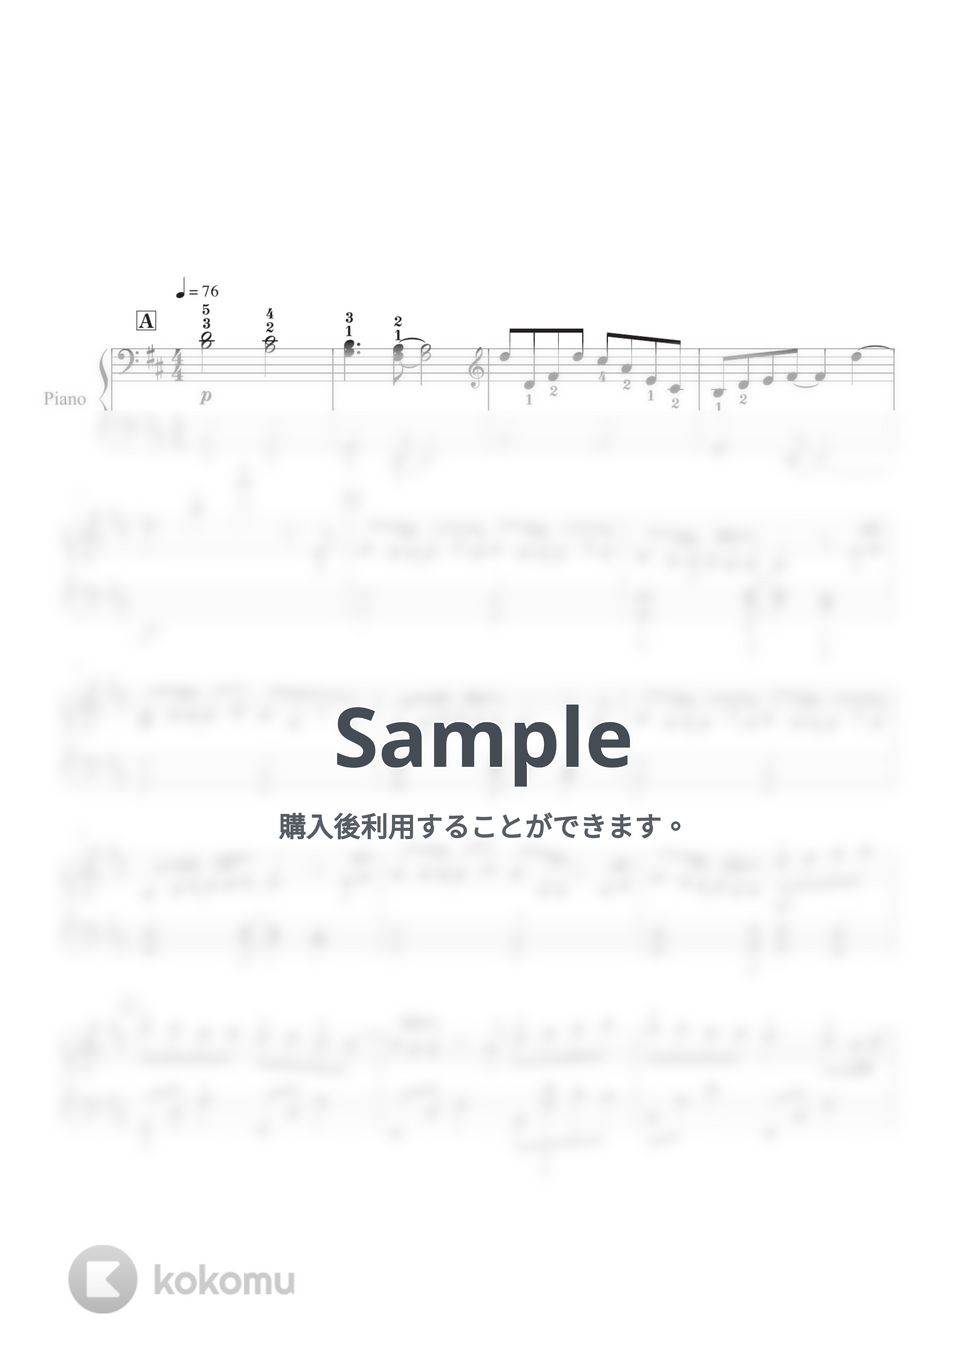 LiSA - 炎・LiSA/ピアノソロ初級 by SugarPM